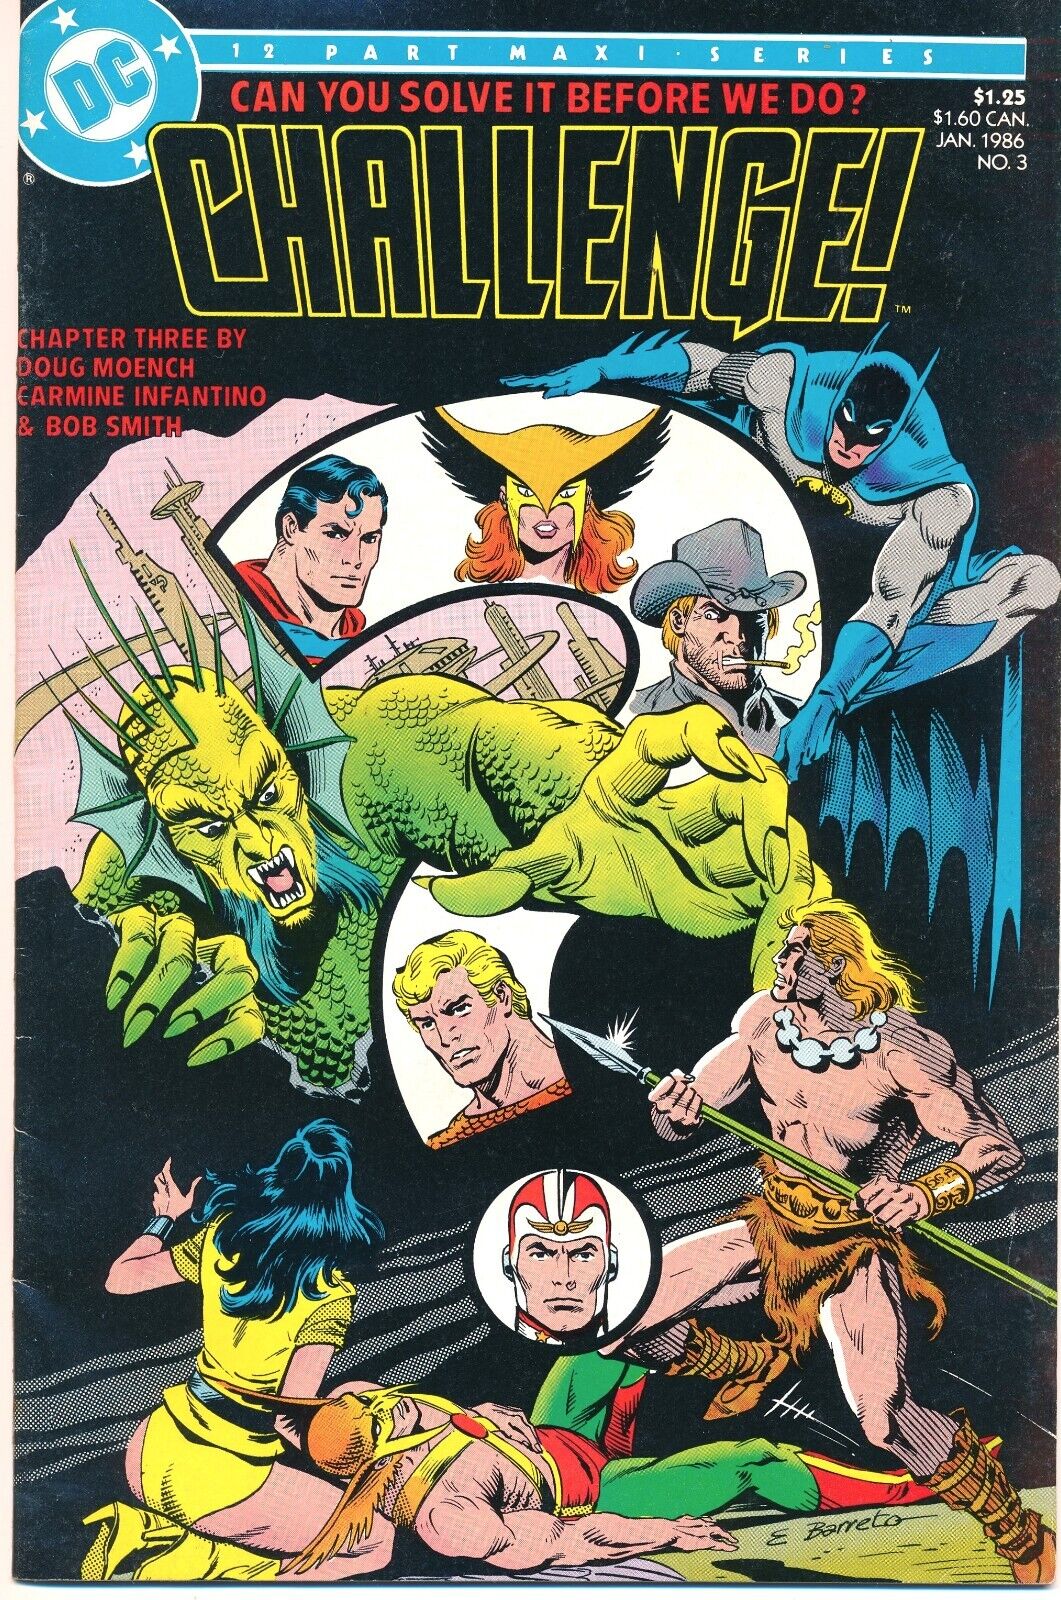 DC Challenge #3 Comic Book, DC Comics, 1985